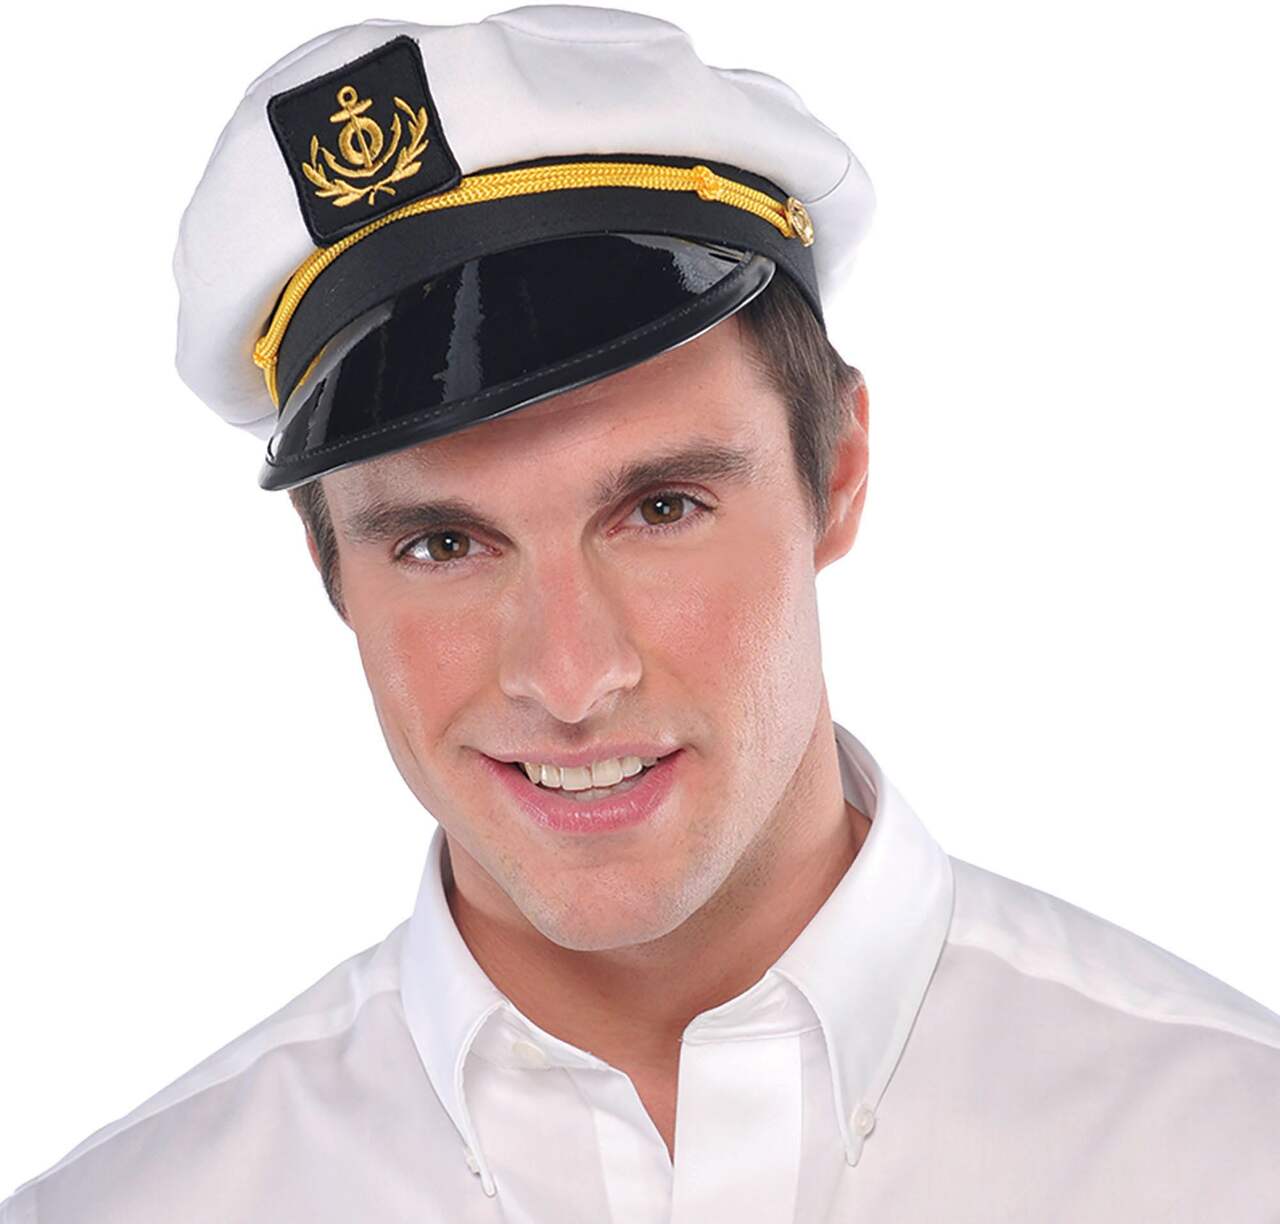 Funny Party Hats Yacht Captain Hat - Sailor Cap, Skipper Hat, Navy Marine  Hat - Costume Accessories